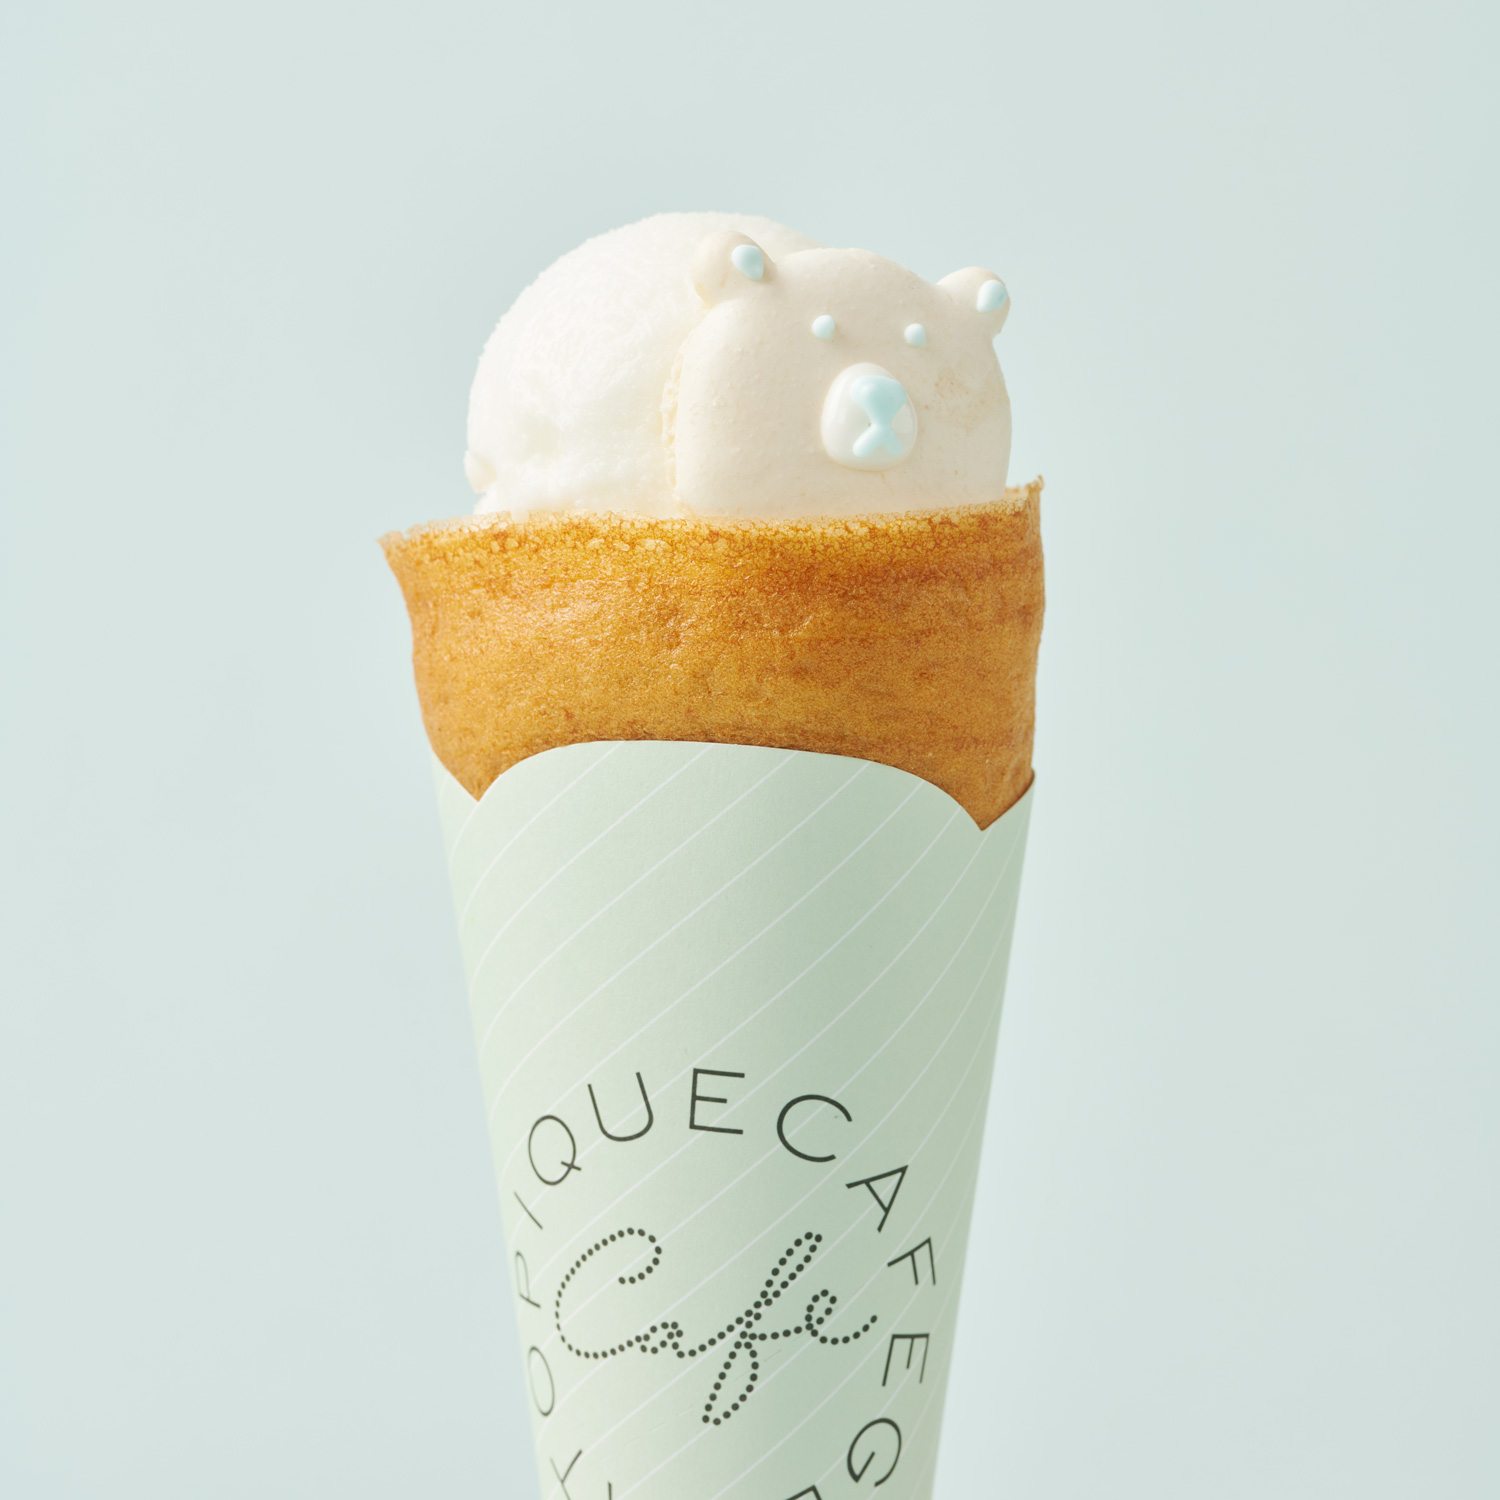 【gelato pique cafe(ジェラート ピケ カフェ)】期間限定！「White Summer～シロクマとひんやりスイーツ～」夏に嬉しいスイーツをキュートな